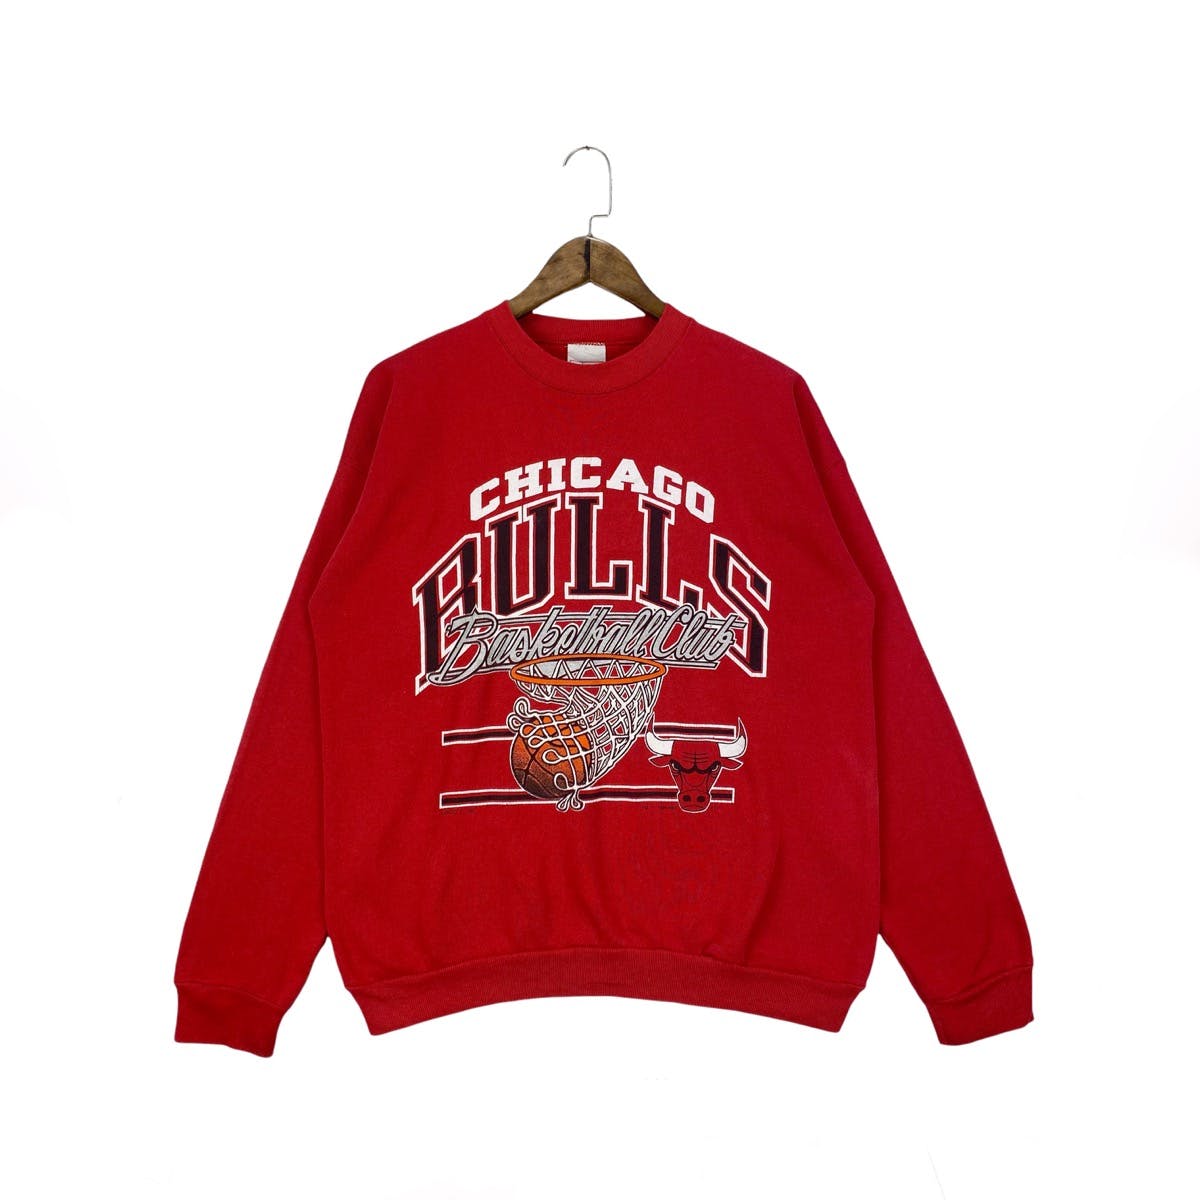 Vintage 1990 Chicago Bulls Basketball Club Sweatshirt - 1